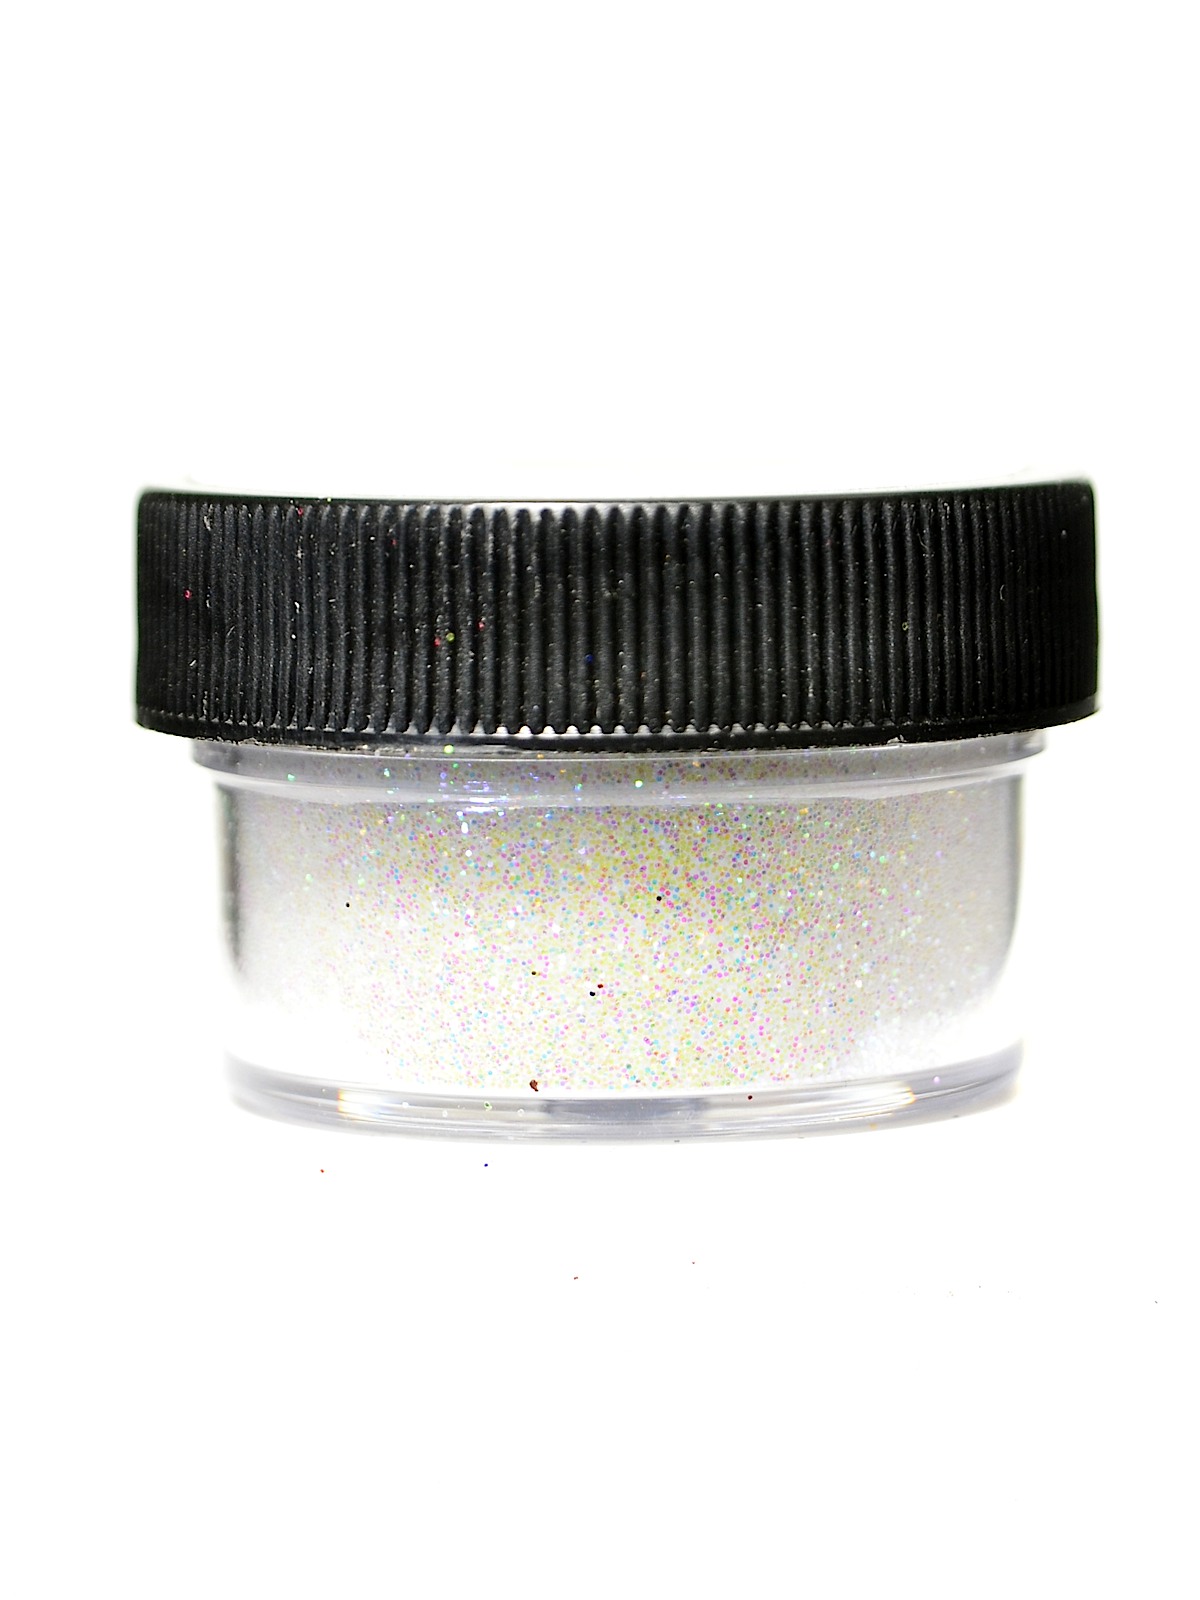 Ultrafine Transparent Glitter Crystal 1 2 Oz. Jar